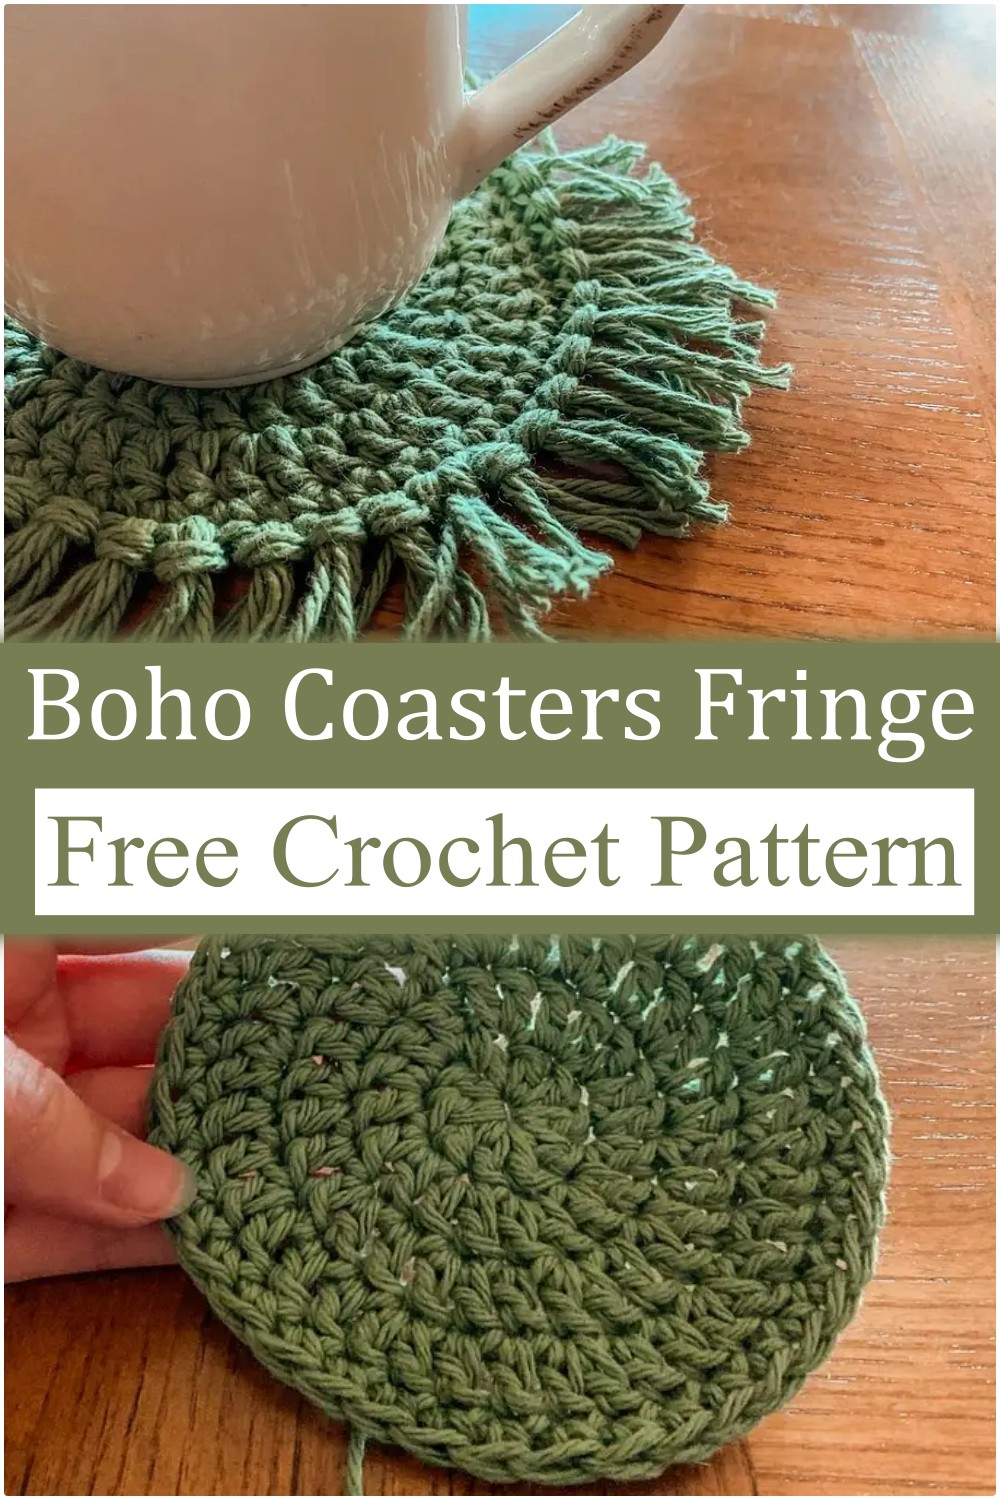 Crochet Boho Coasters Fringe Pattern